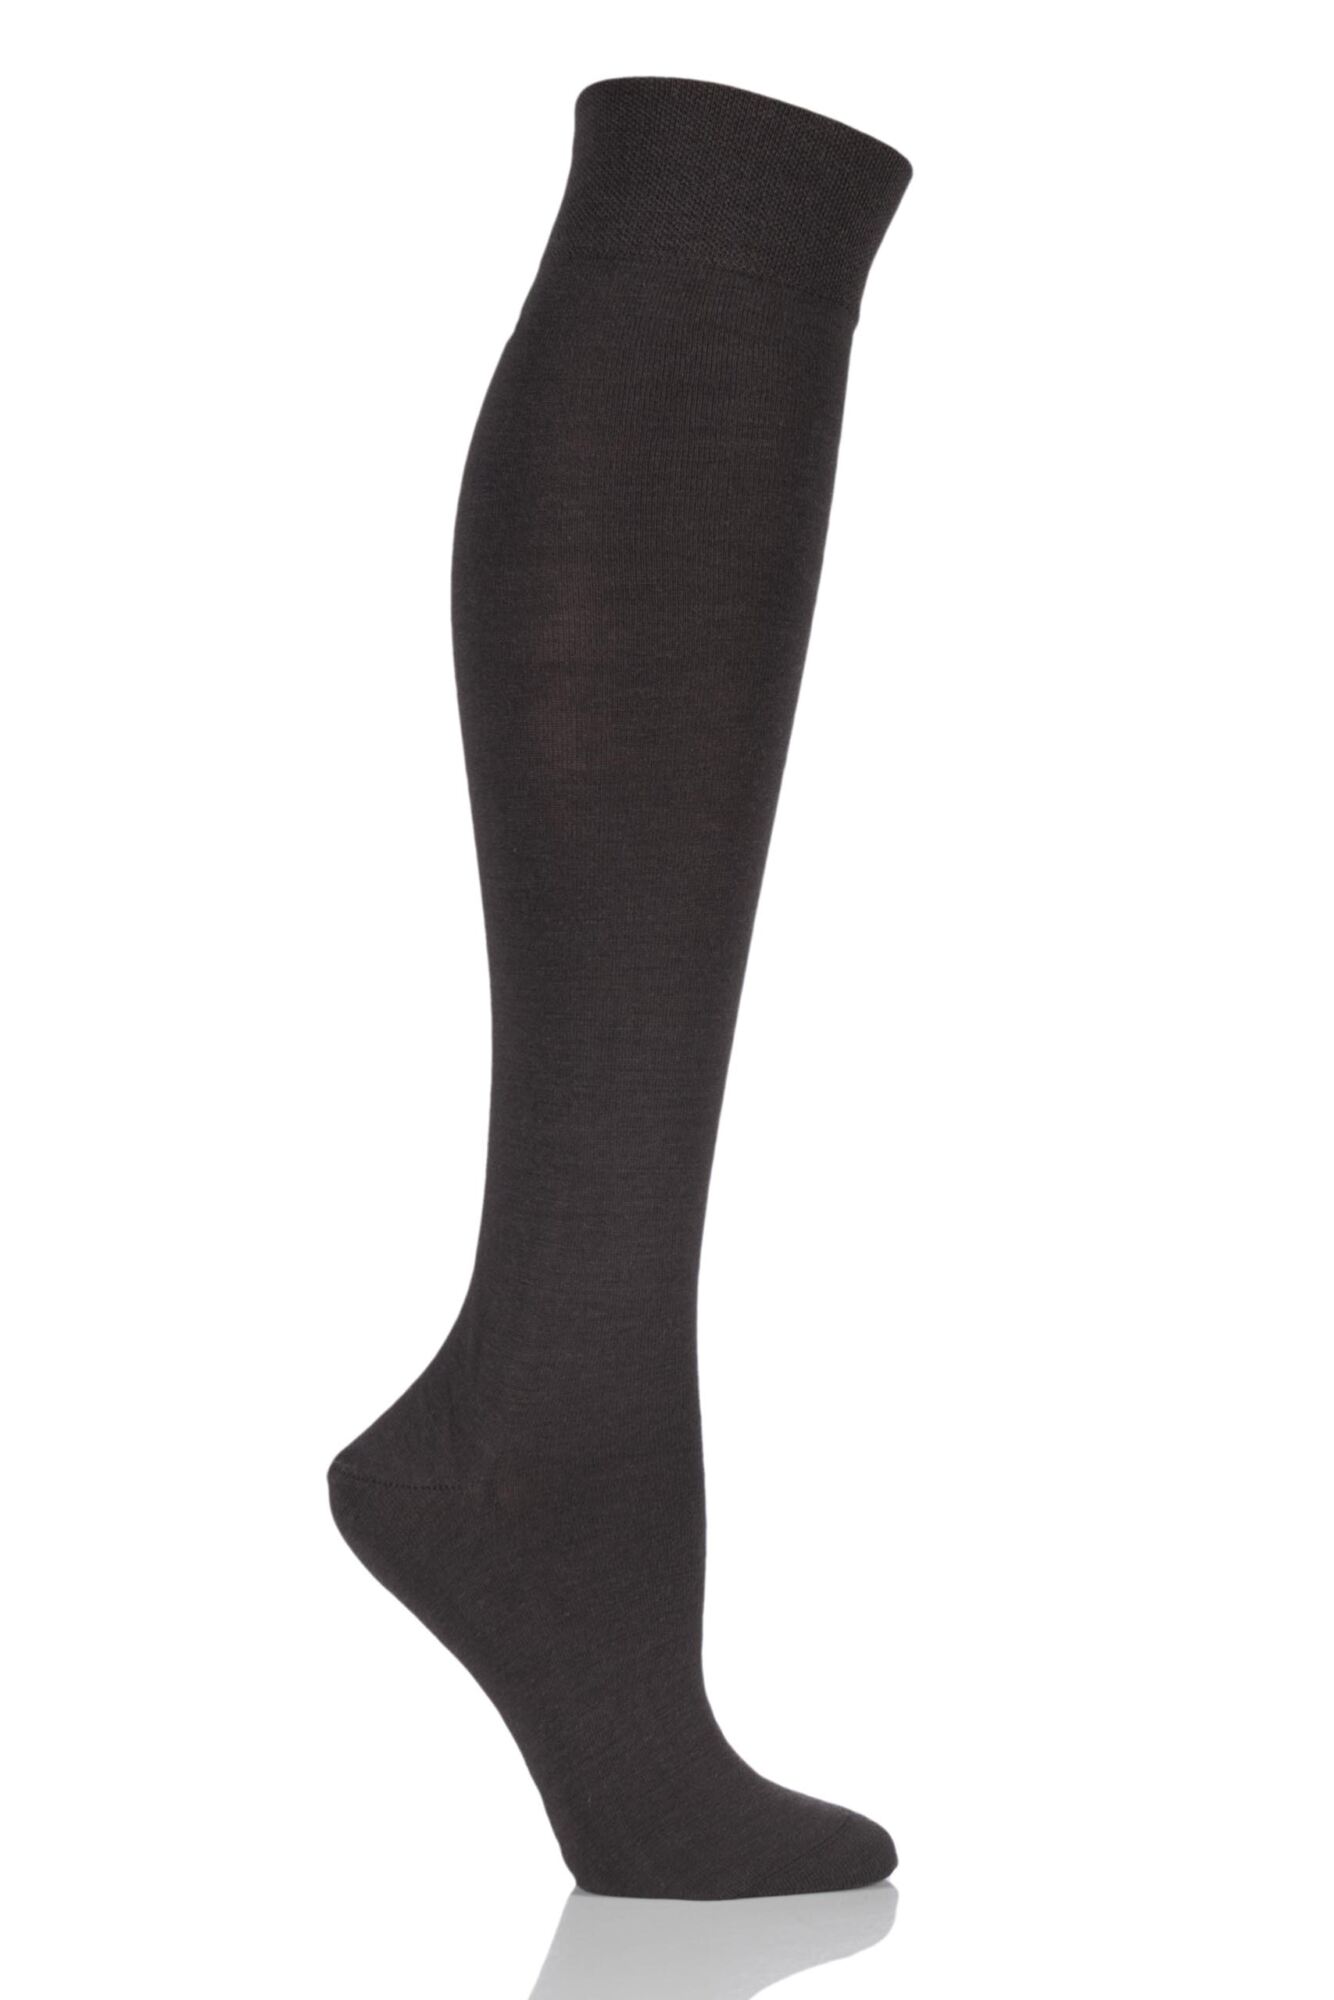 Falke Sensitive Berlin Merino Wool Knee High Sock